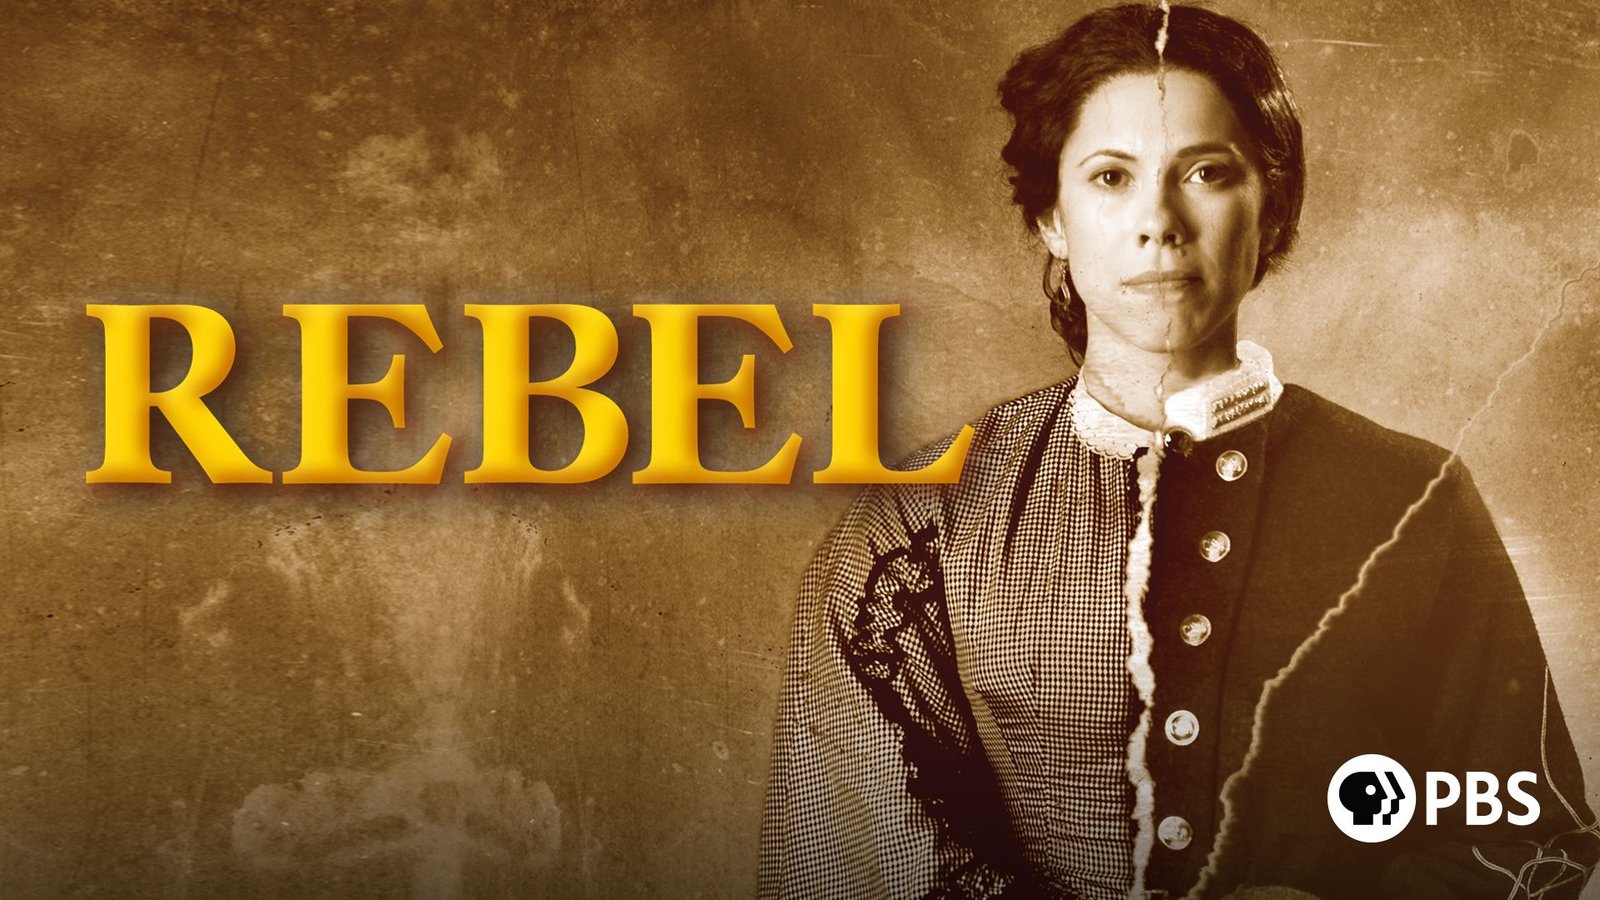 Rebel - Loreta Velazquez - Secret Soldier of the American Civil War